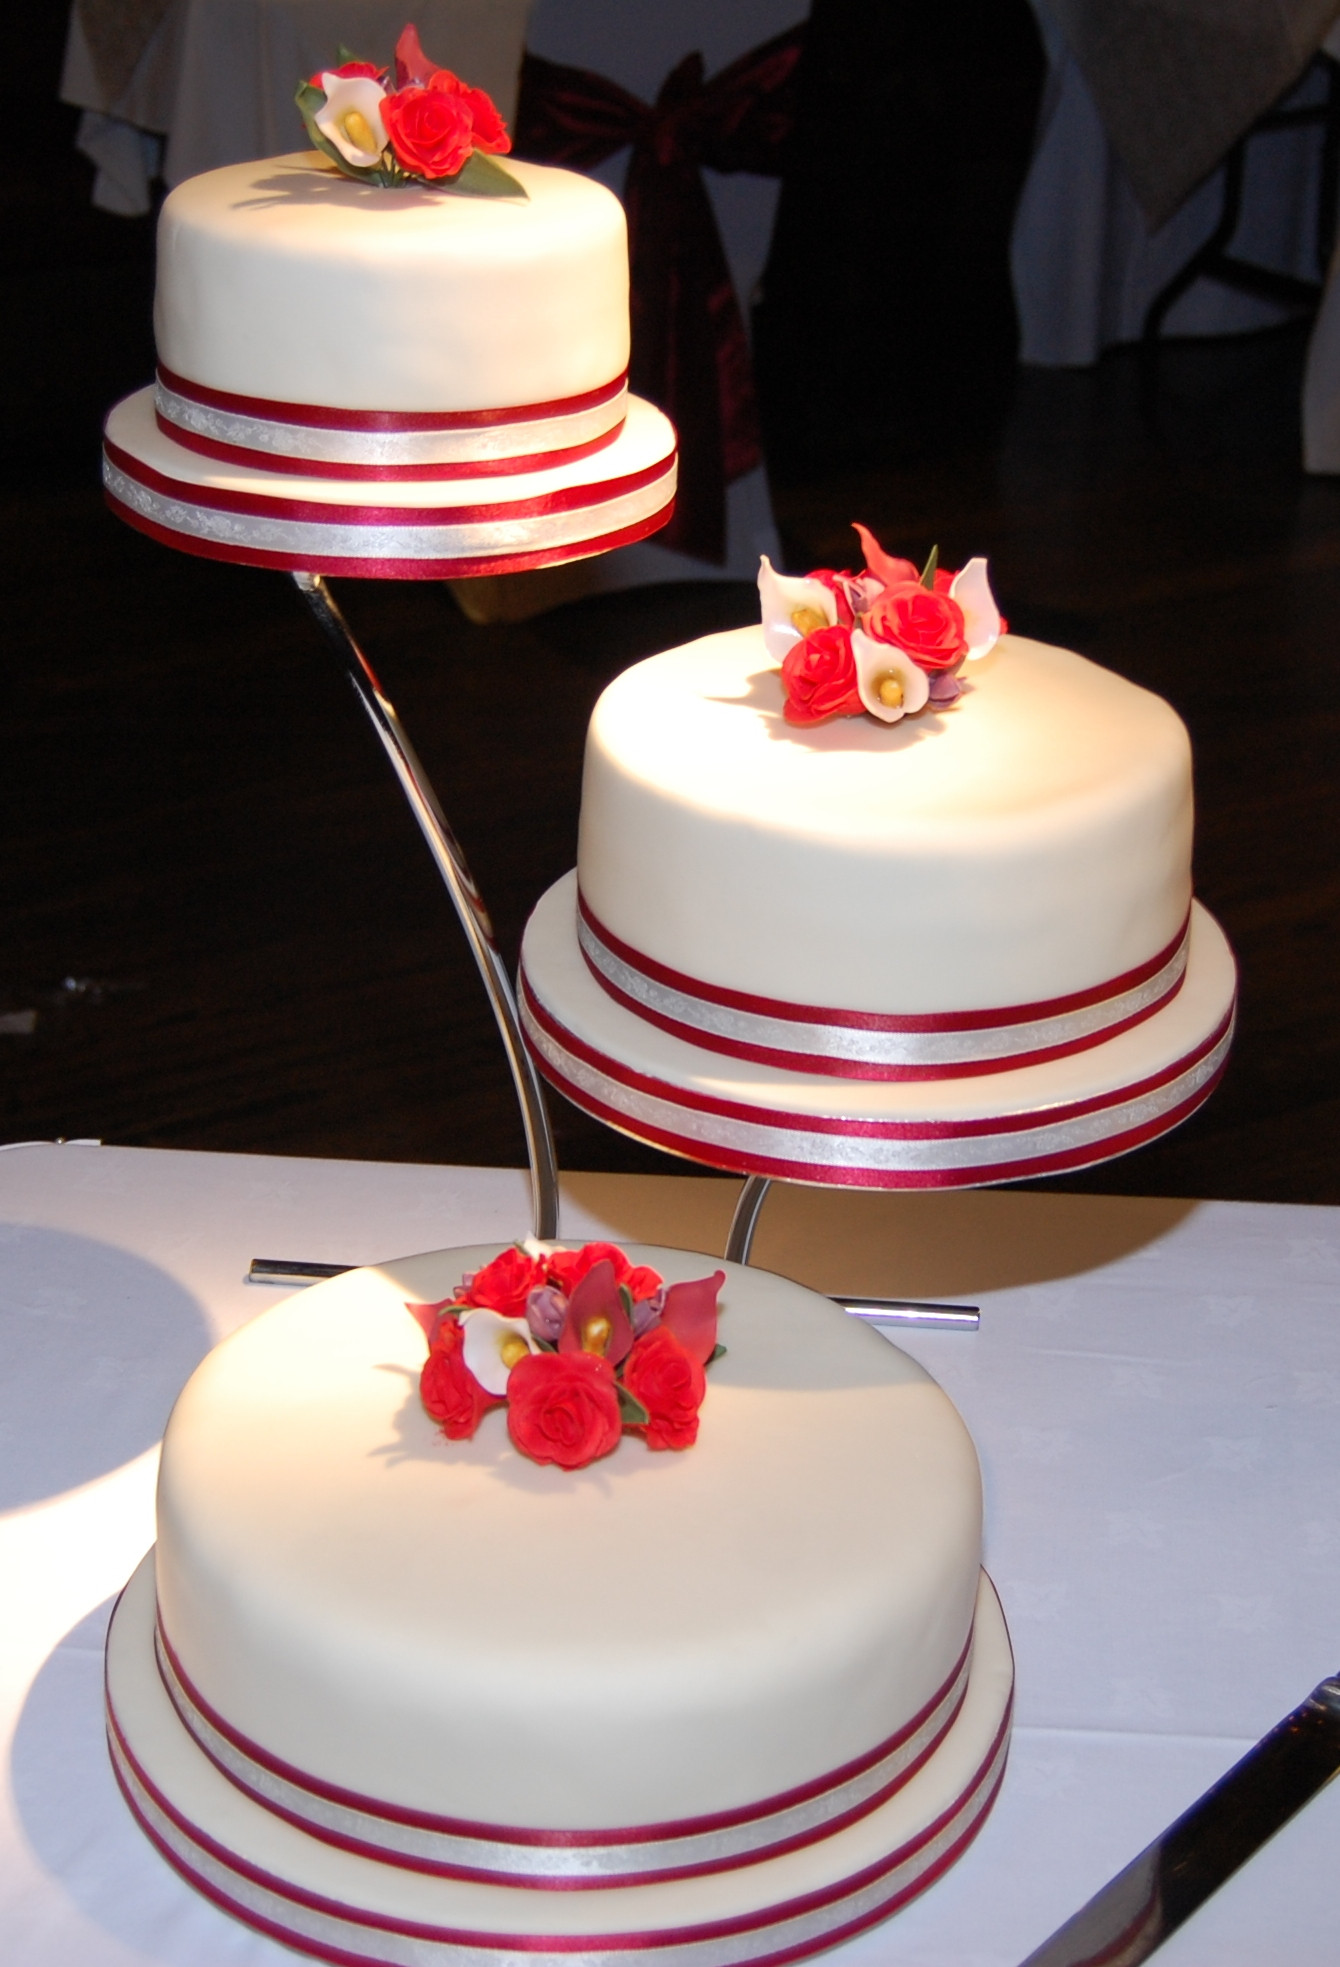 3 Tier Wedding Cakes Pictures
 Wedding cakes